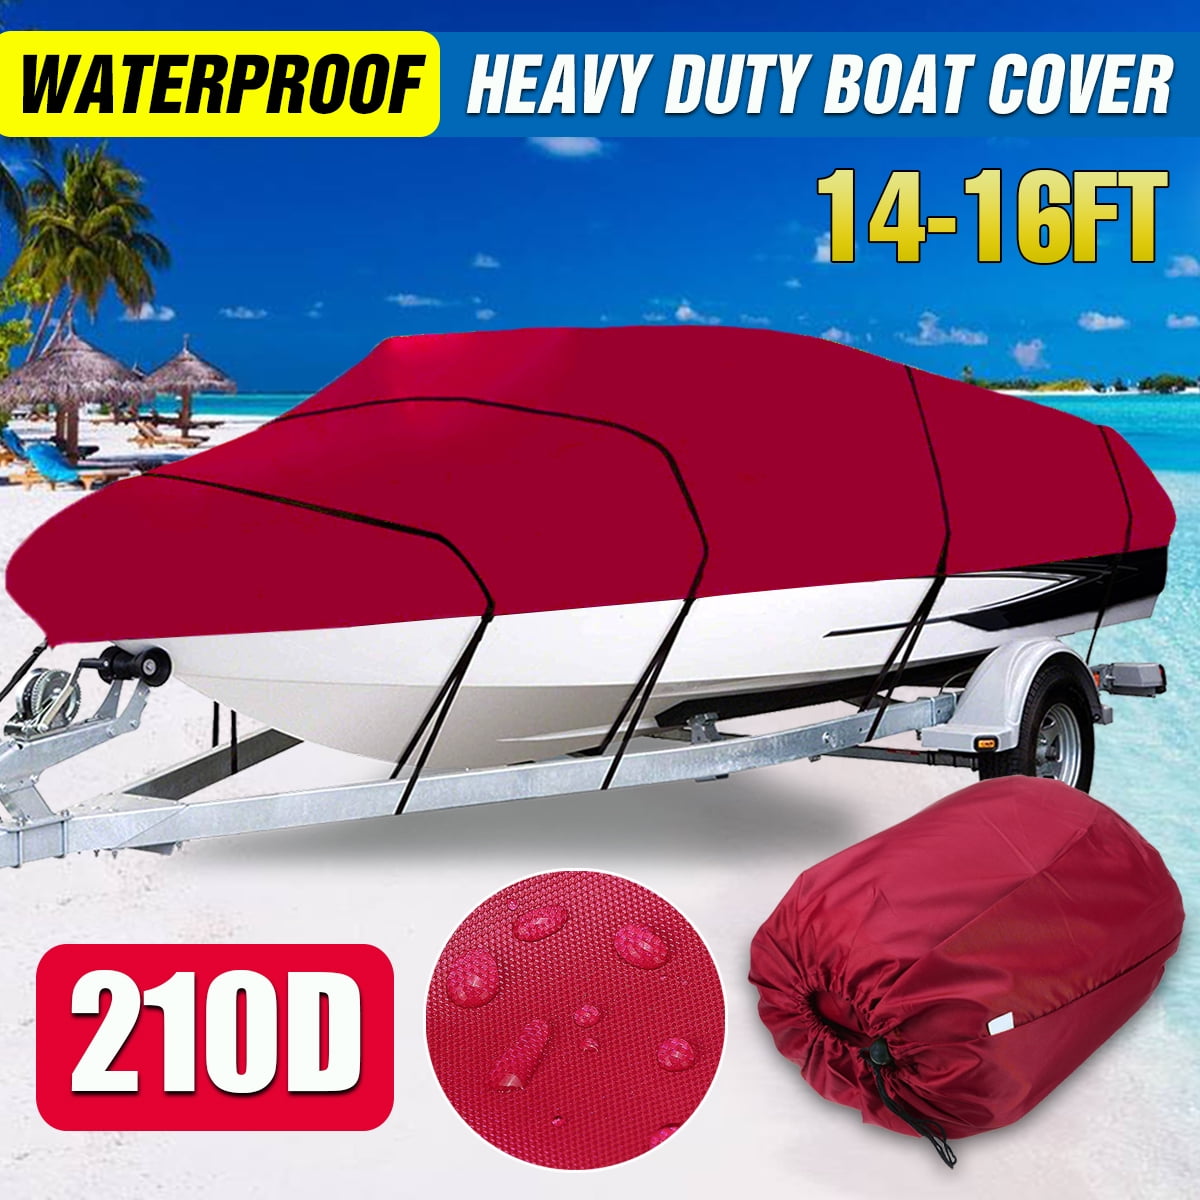 14-16Ft Heavy Duty Boat Cover Fits V-Hull Fishing Ski Bass Shelter Waterproof 